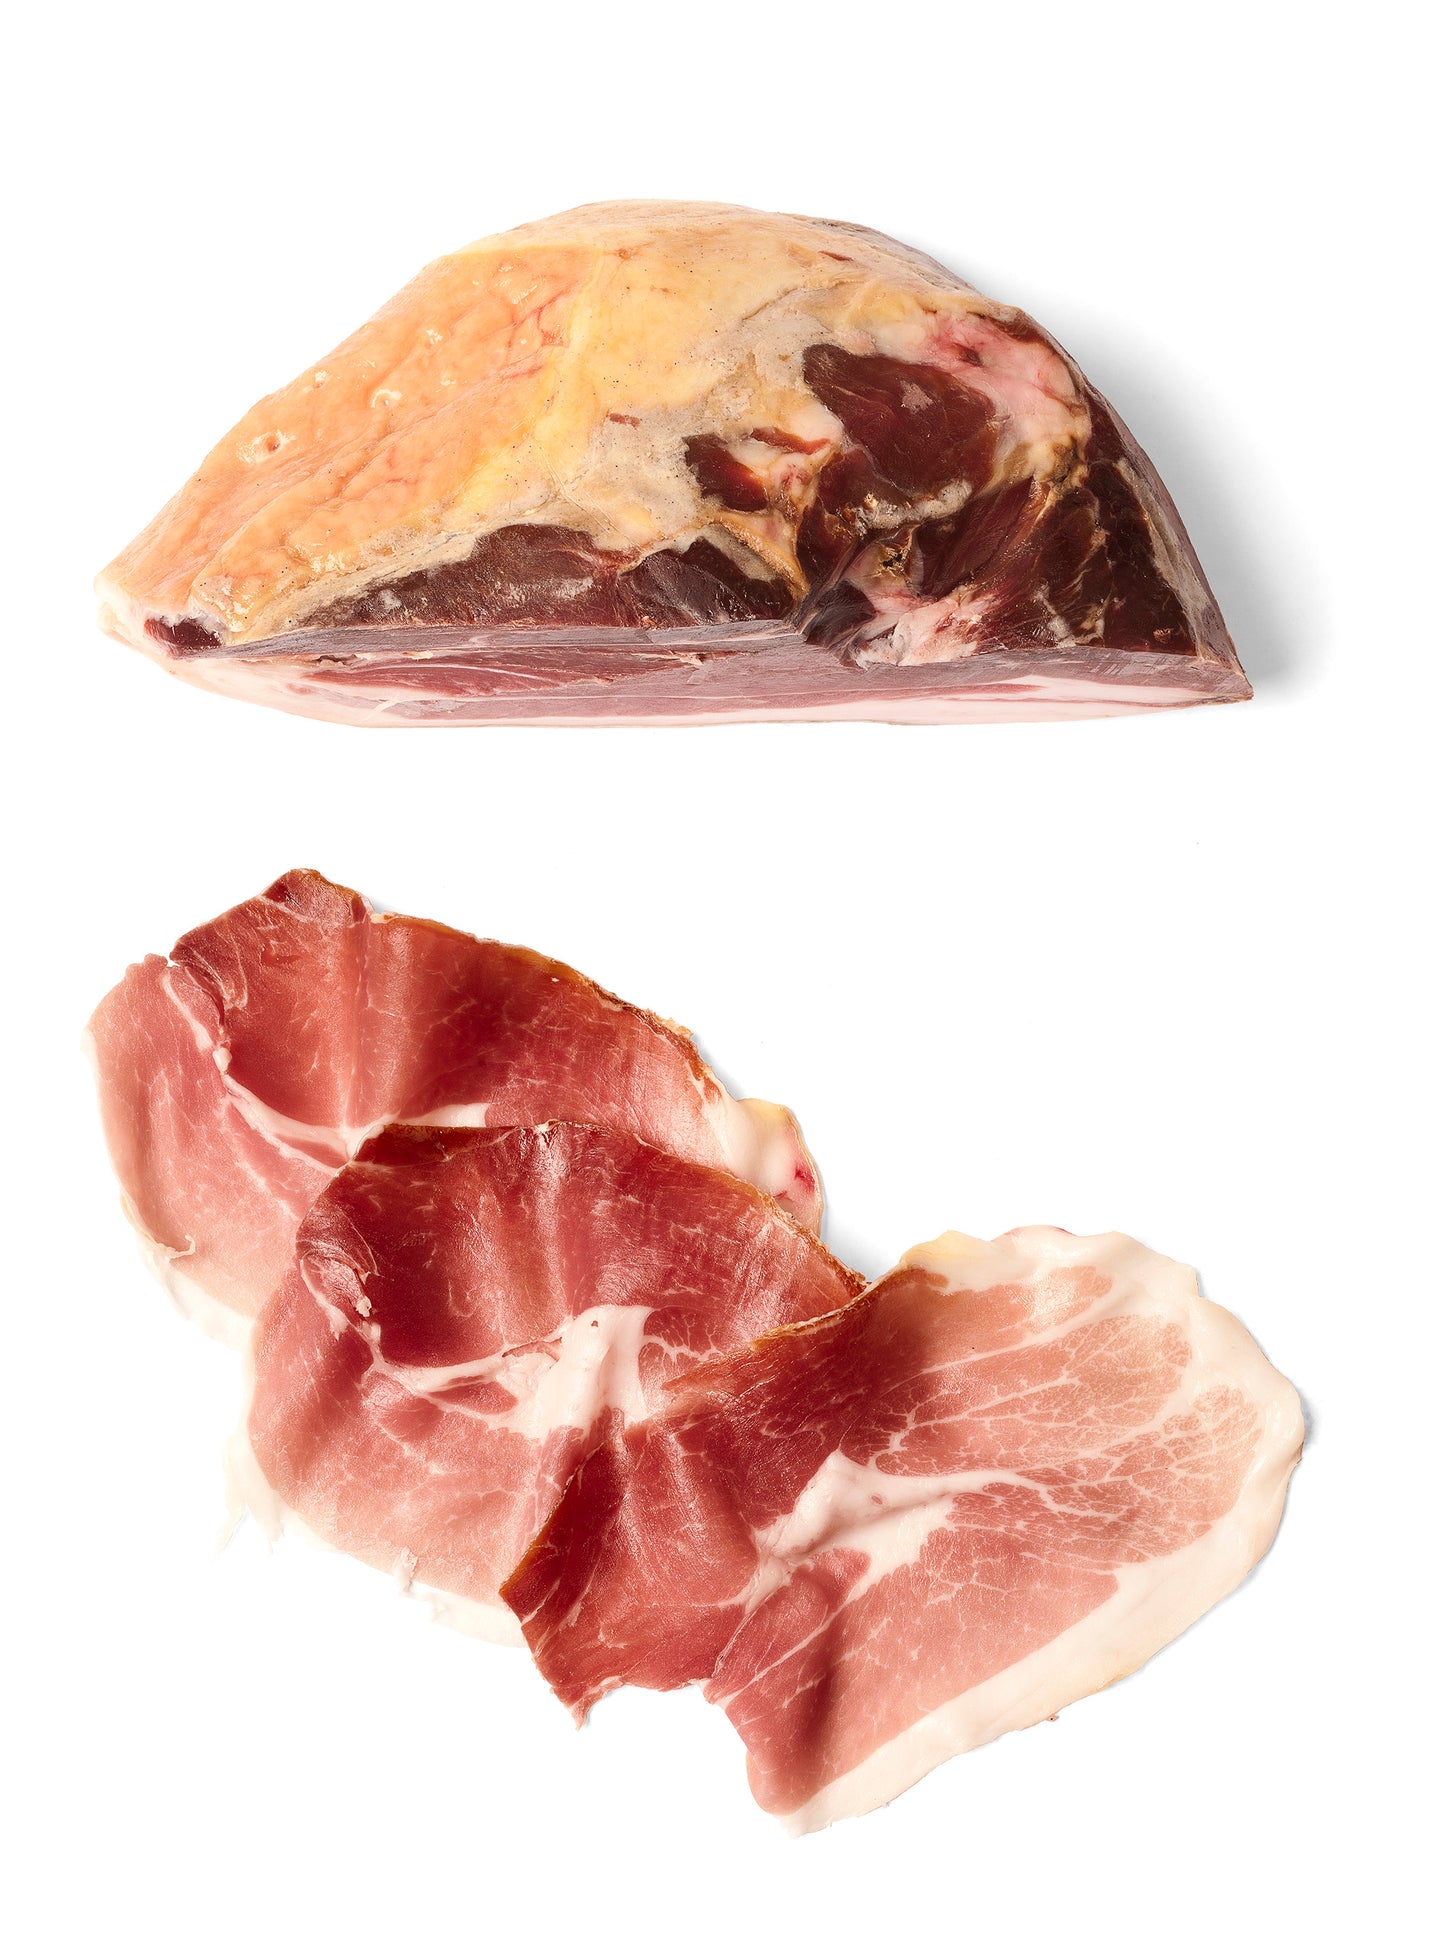 Parma ham aged 18 months